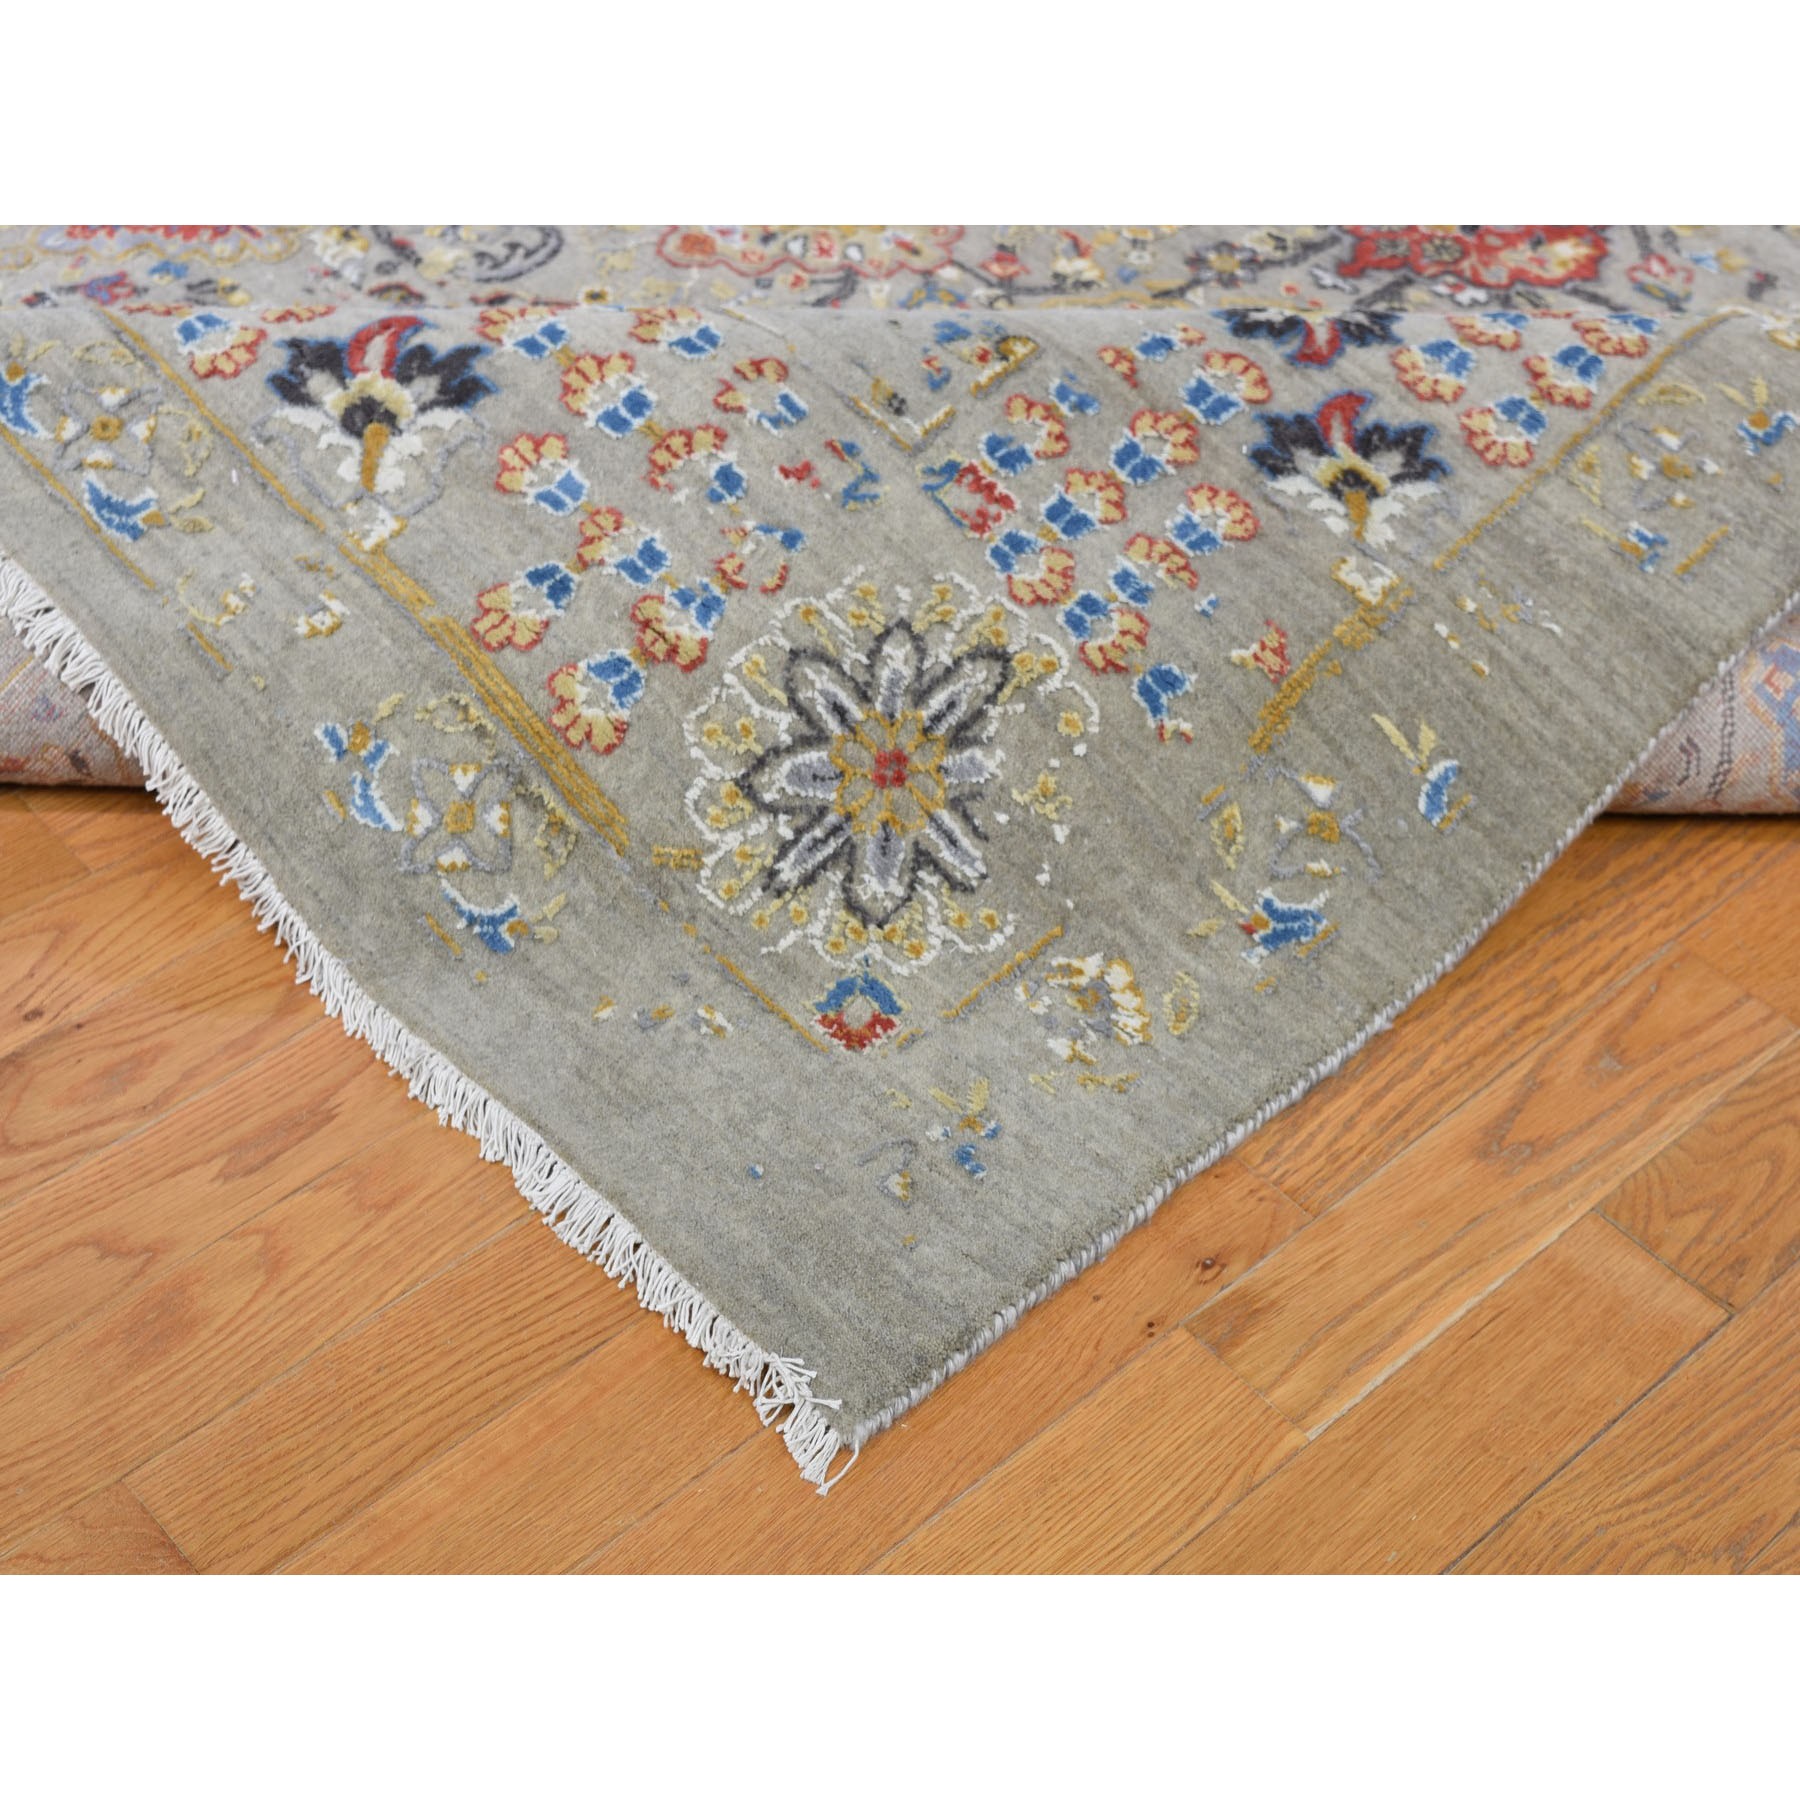 12'x18'1" Oversize THE SUNSET ROSETTES Wool & Pure Silk Hand Woven Oriental Rug 